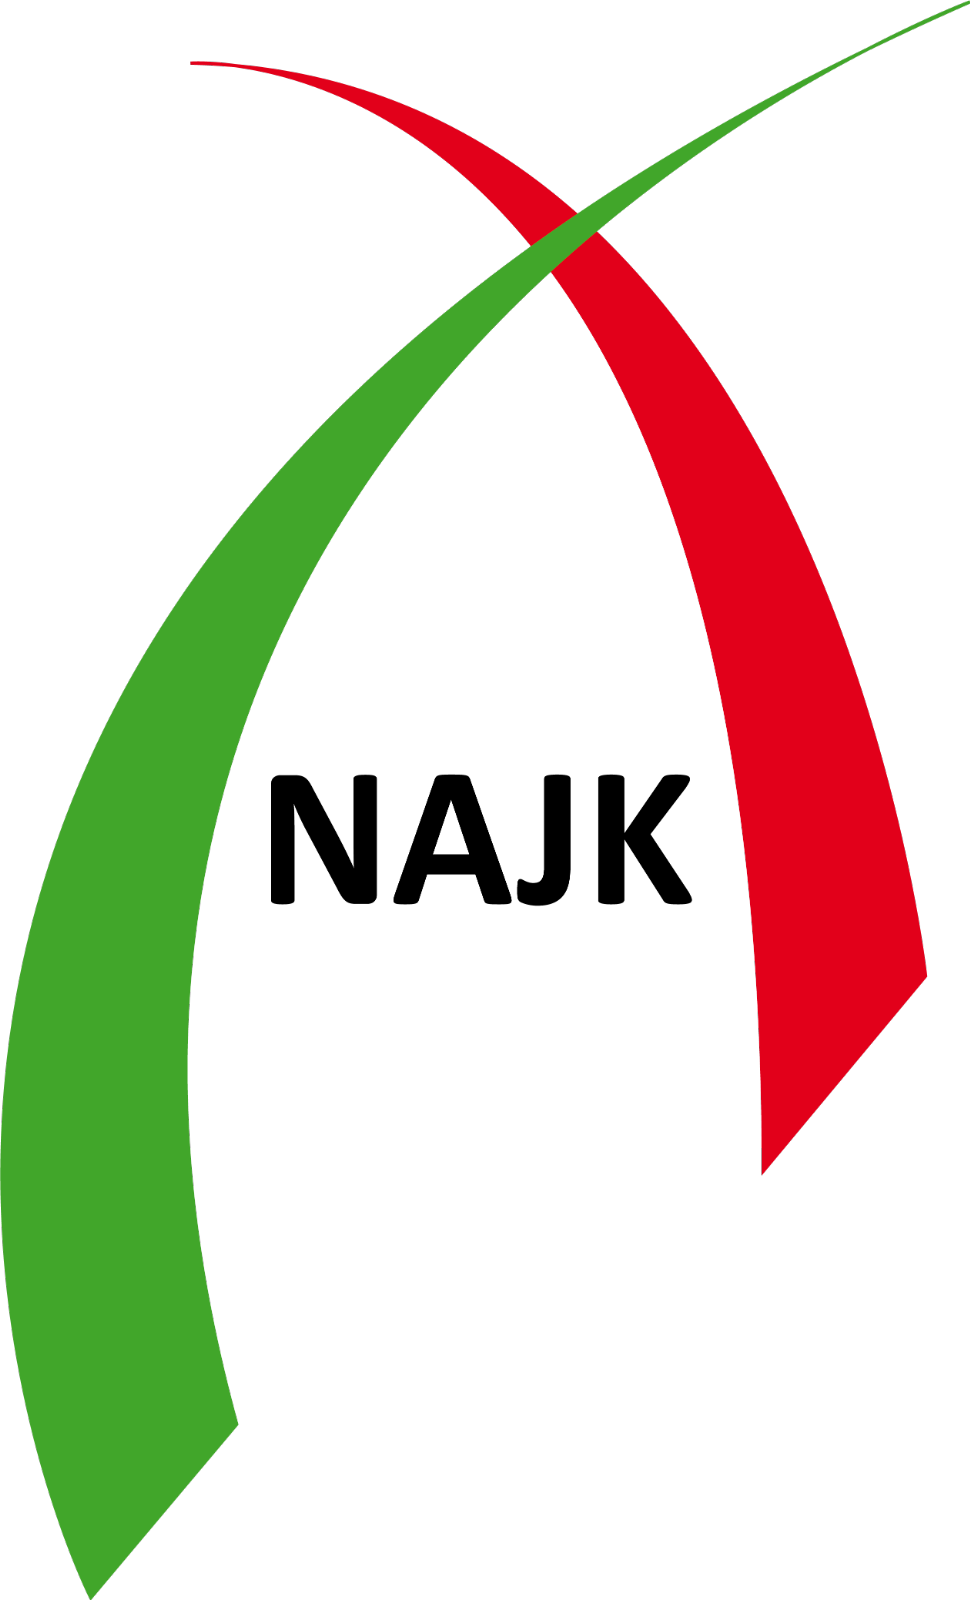 NAJK logo